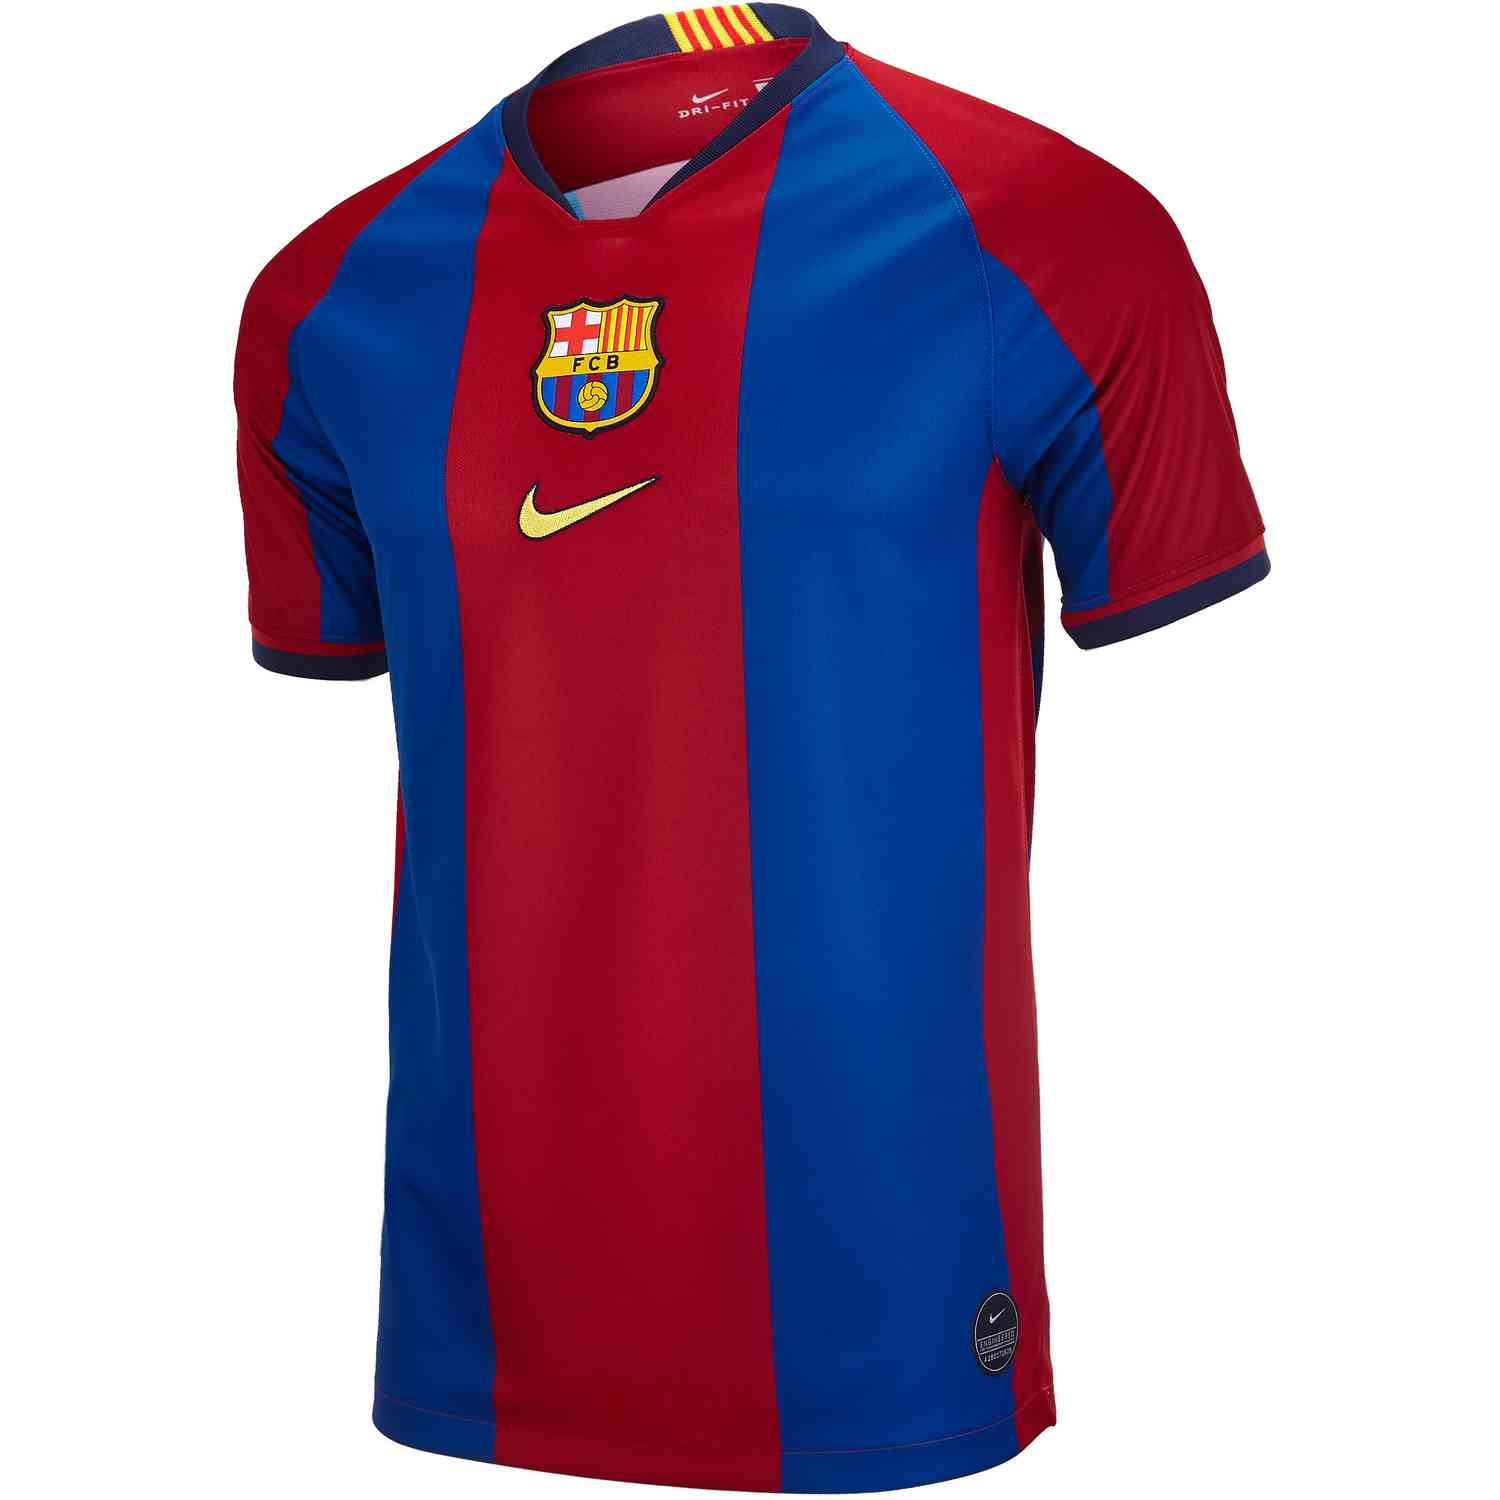 barcelona 99 jersey